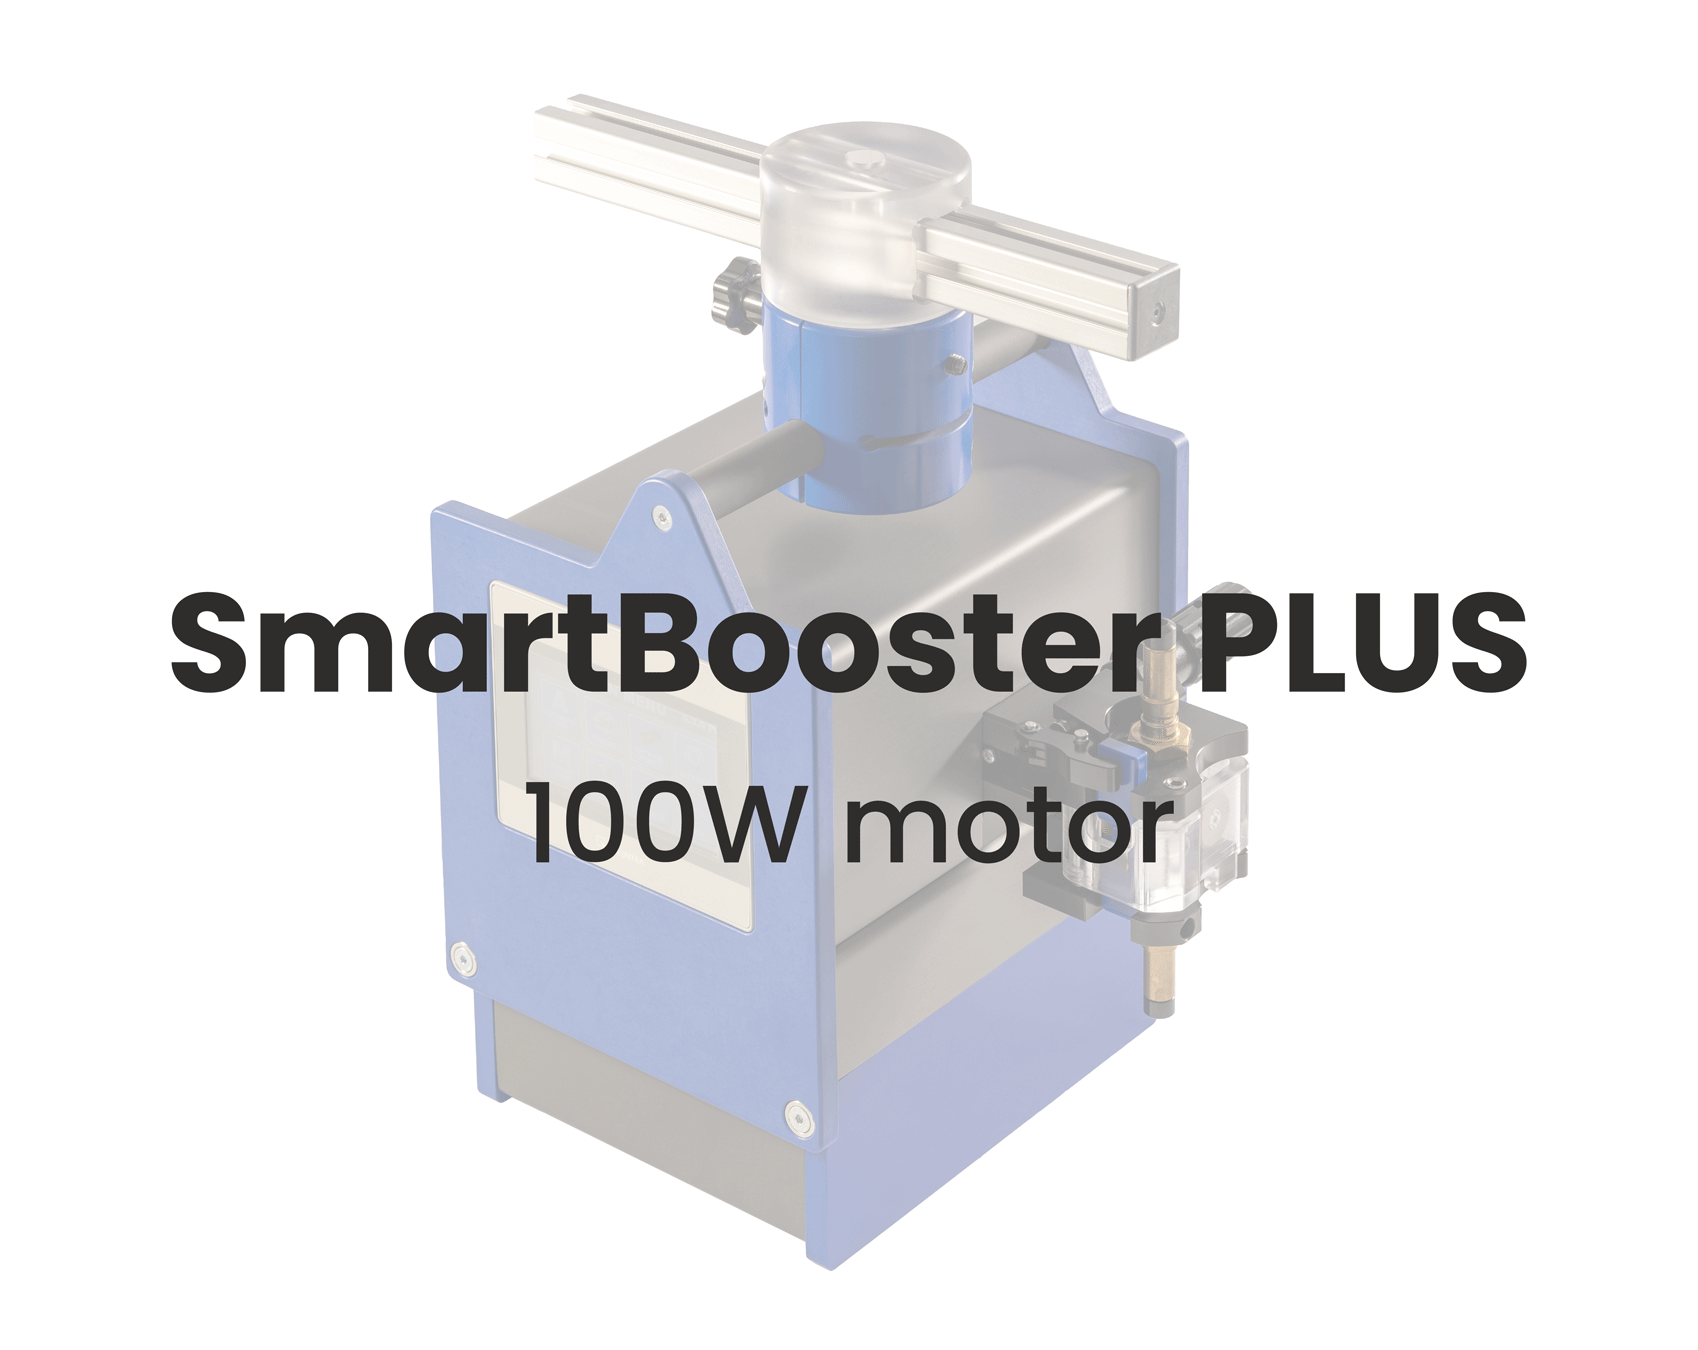 SmartiBooster PLUS 100W motor